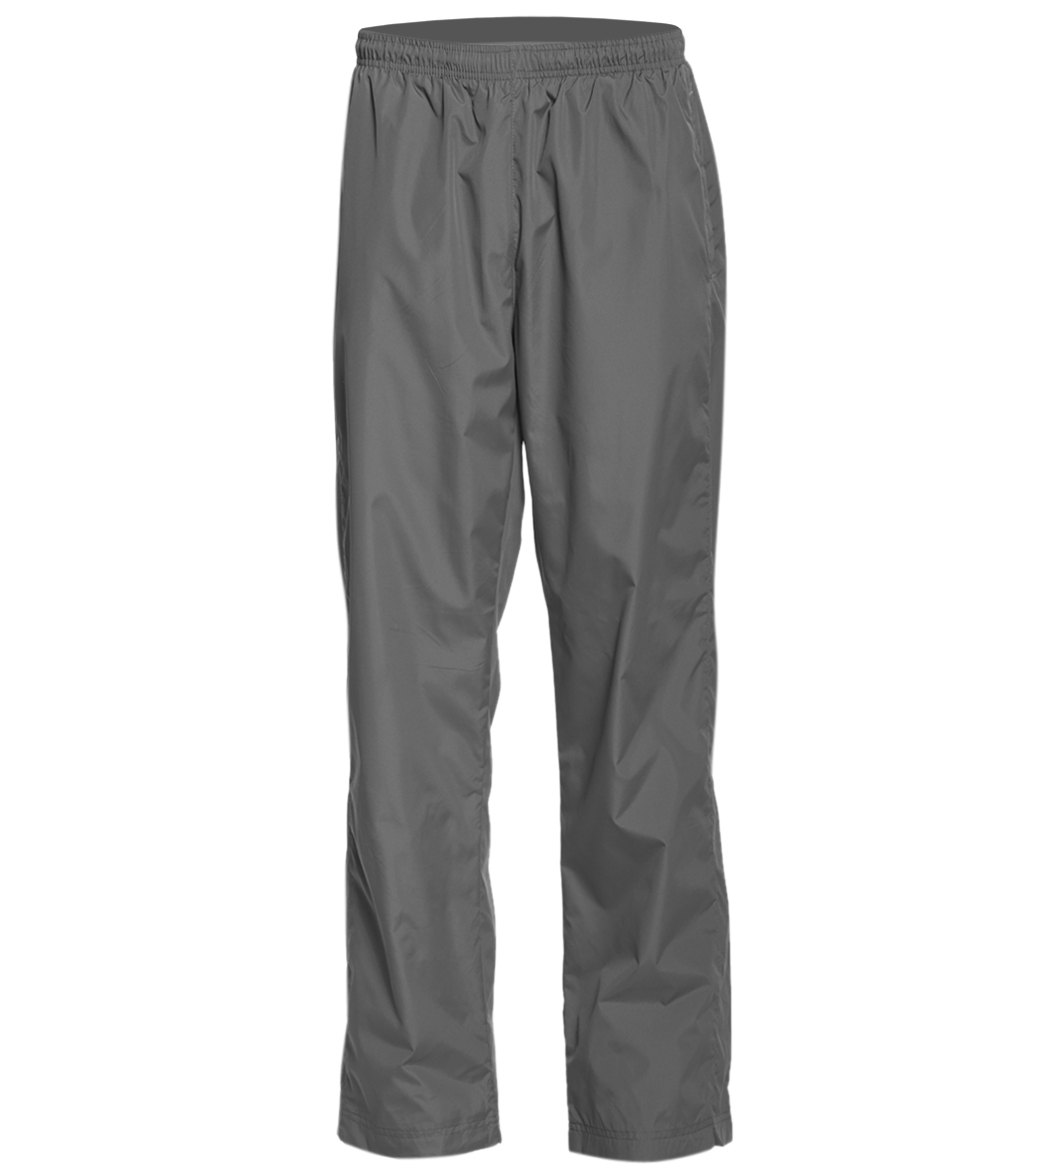 Women's Warm Up Pants - Graphite Grey 2Xl Polyester - Swimoutlet.com